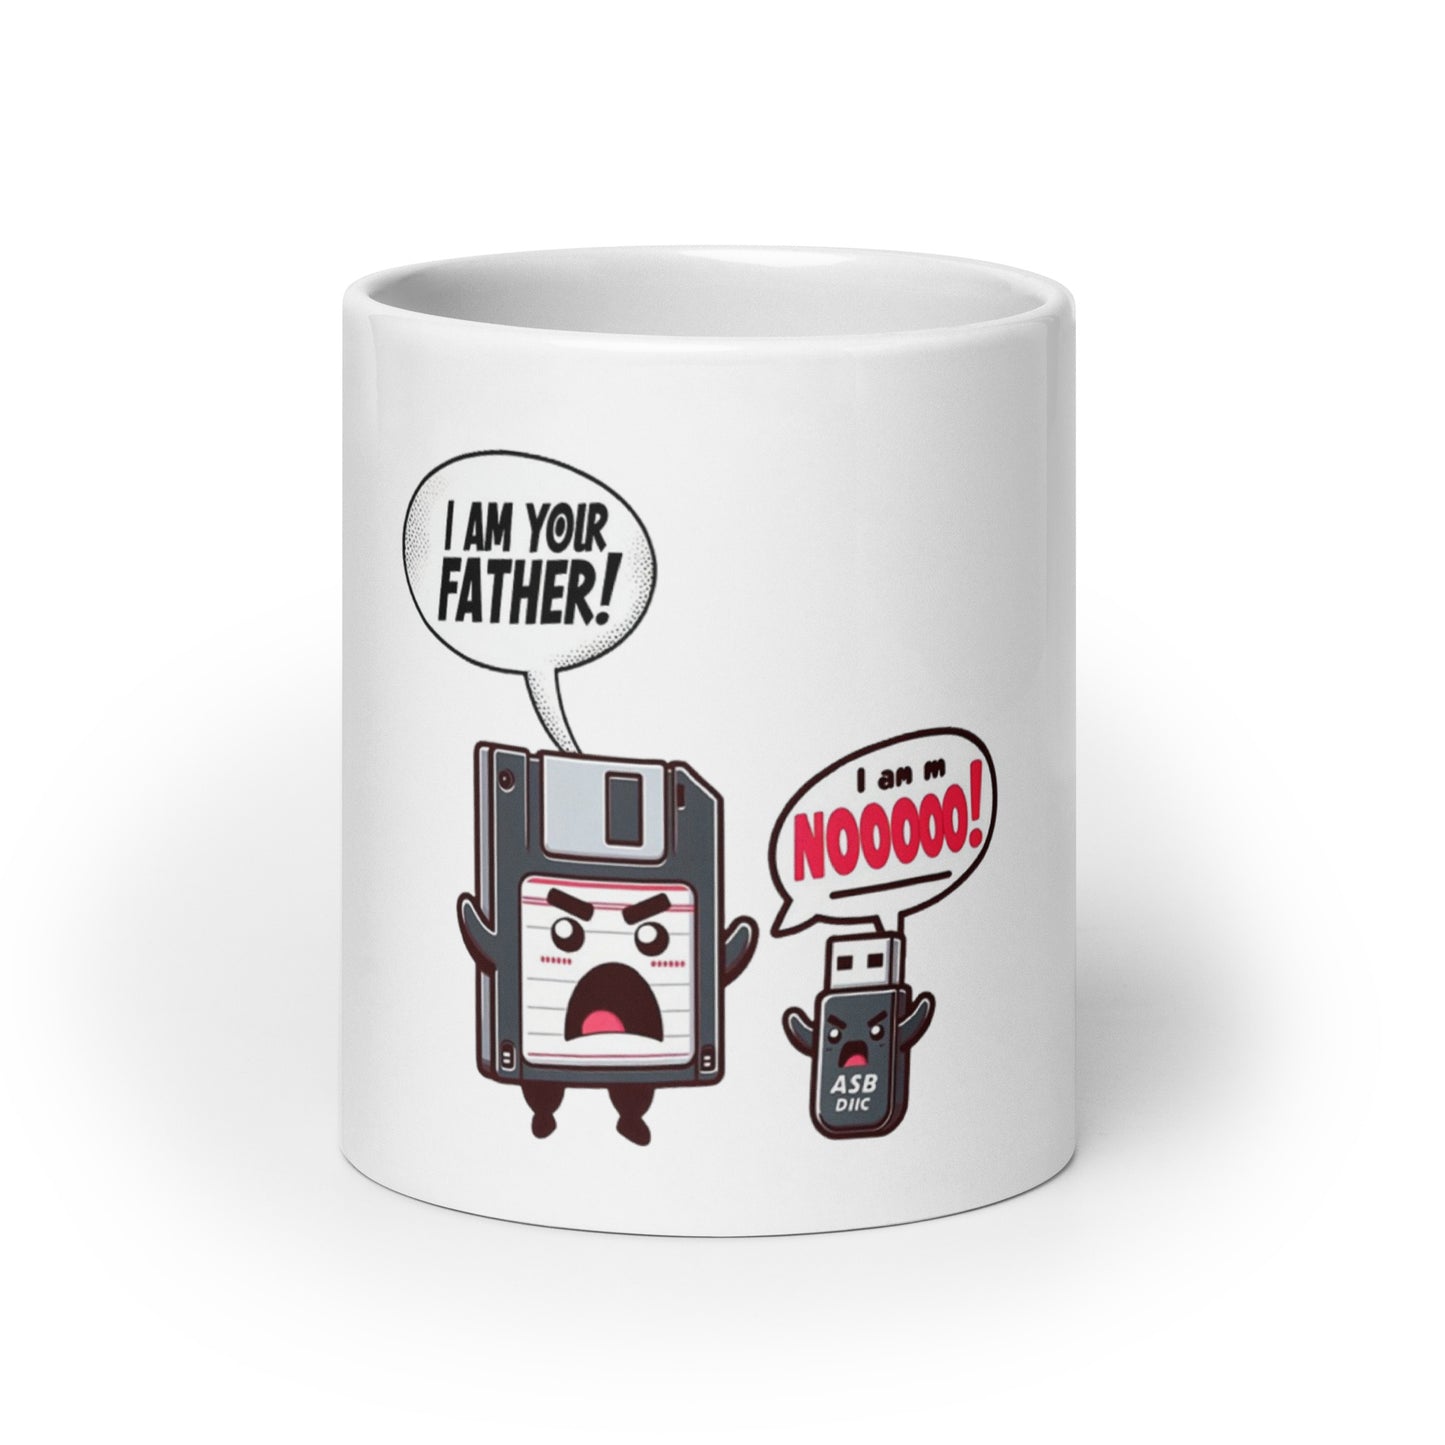 I'm Your Father mug